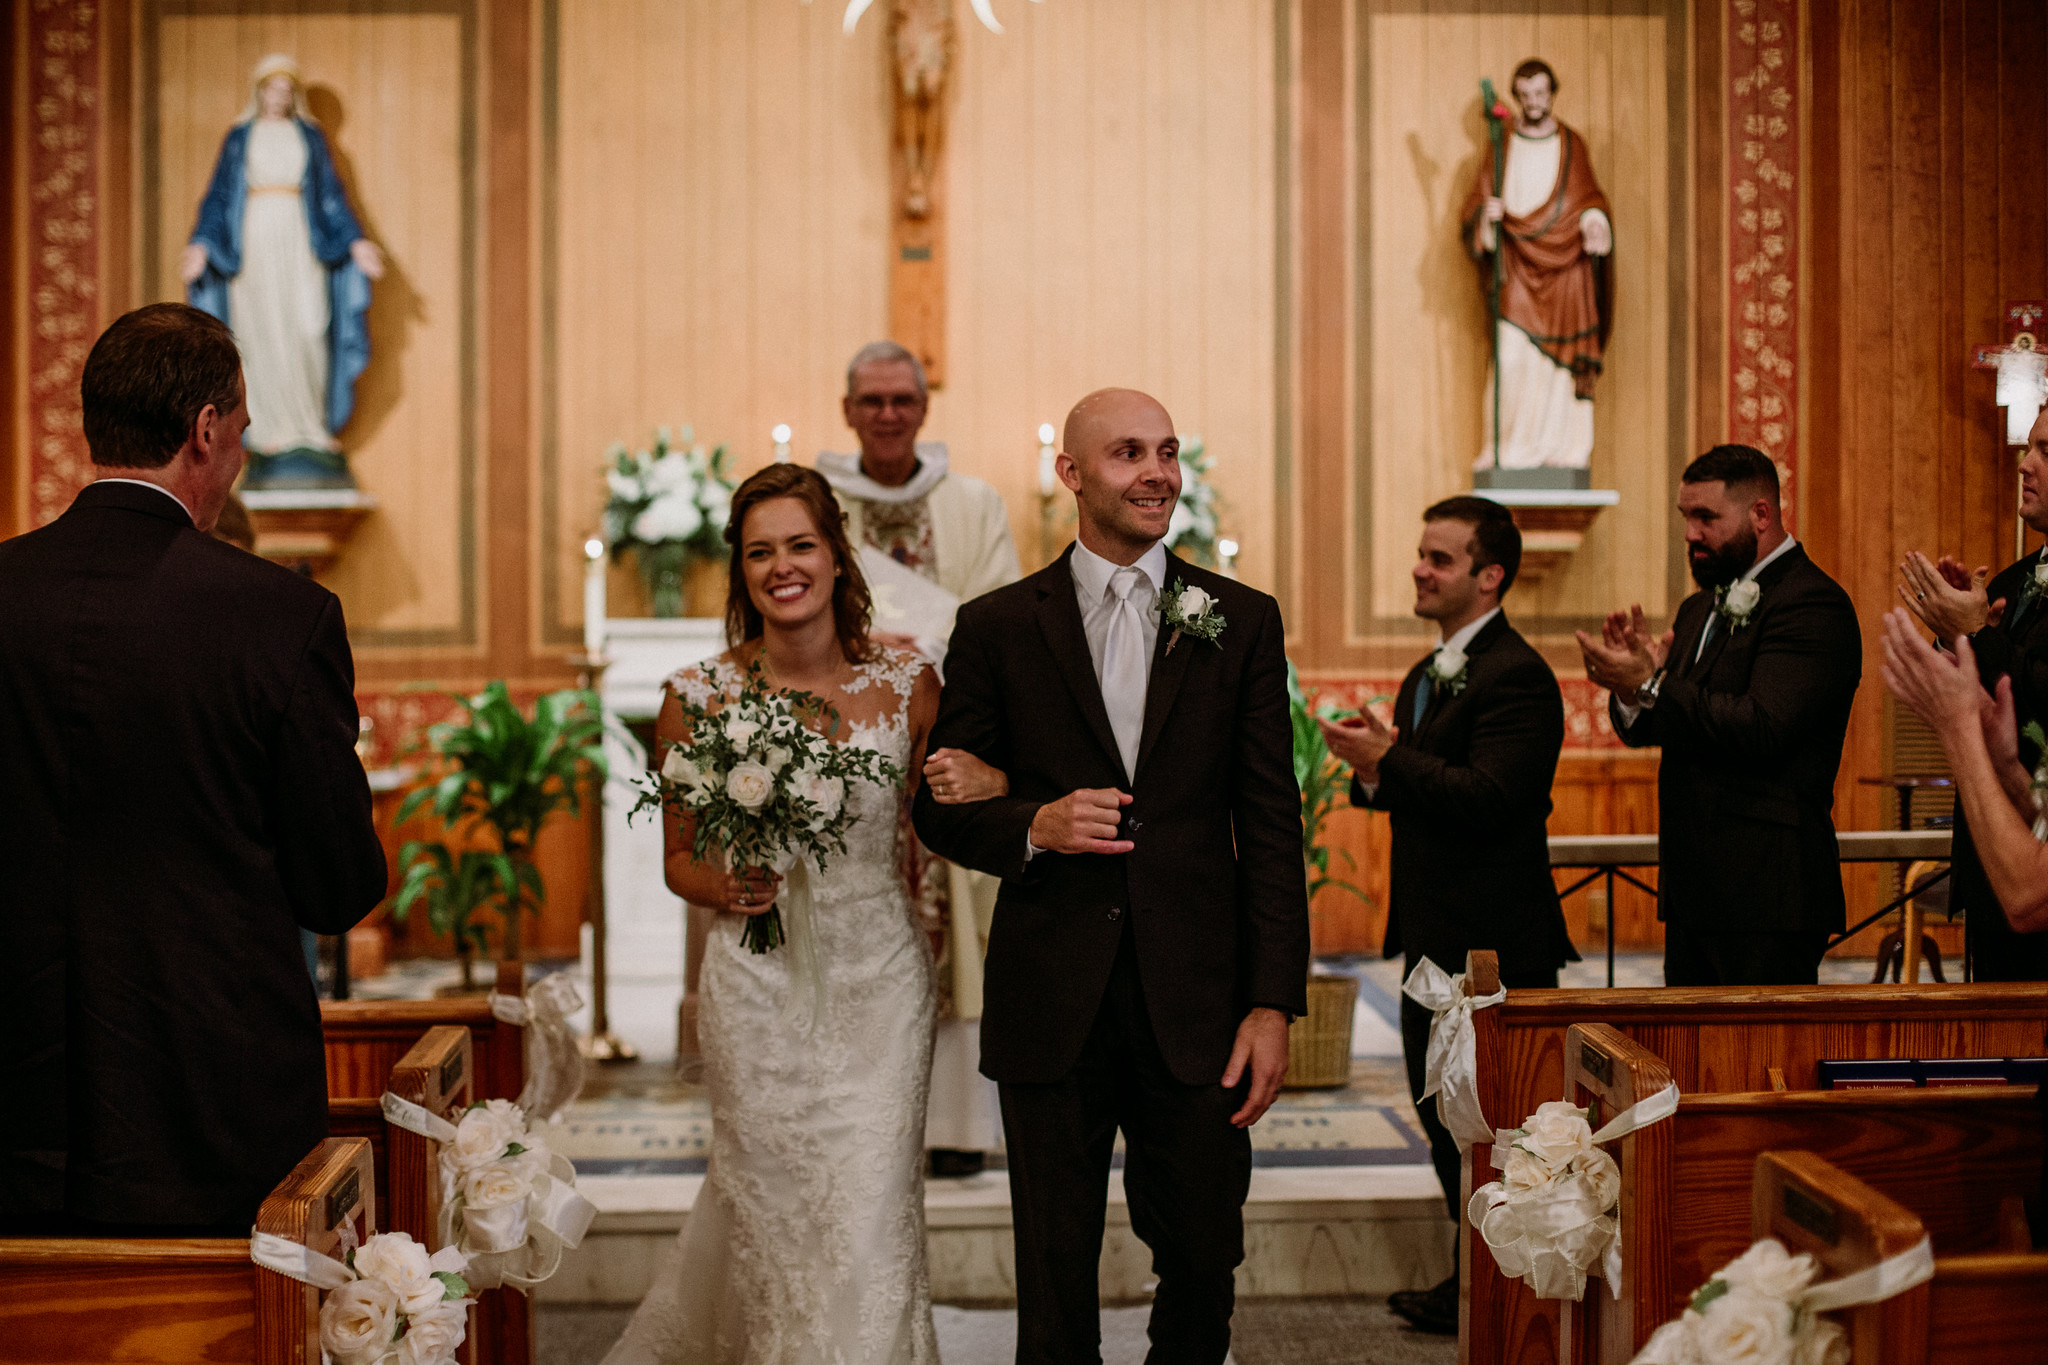 Wedding ceremony at St Michael Catholic Church (Tybee Island, GA)